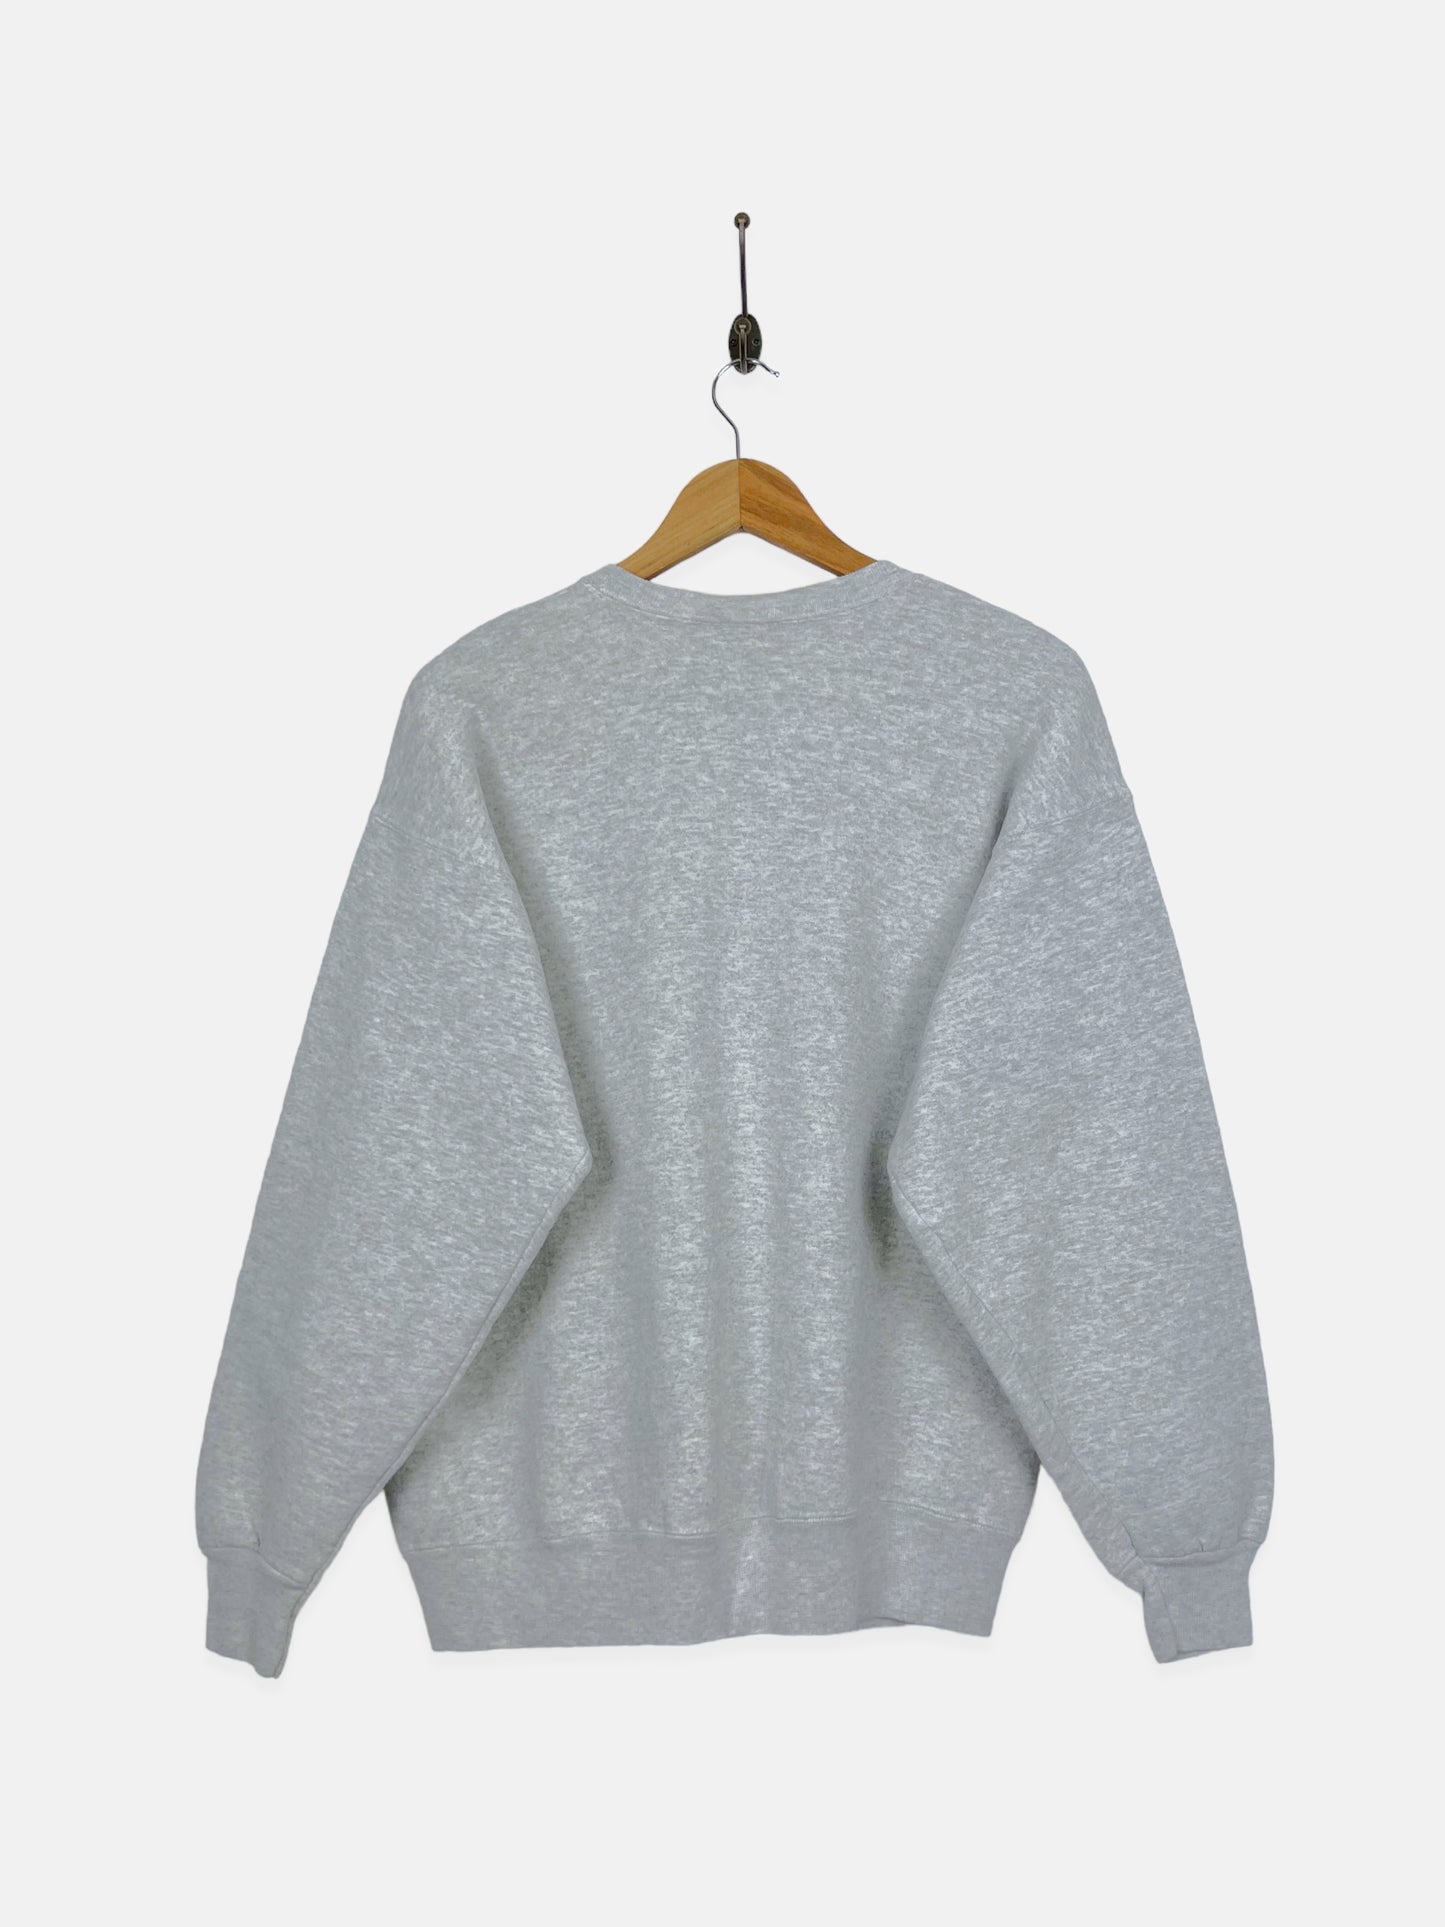 90's Turtle Embroidered Vintage Sweatshirt Size M